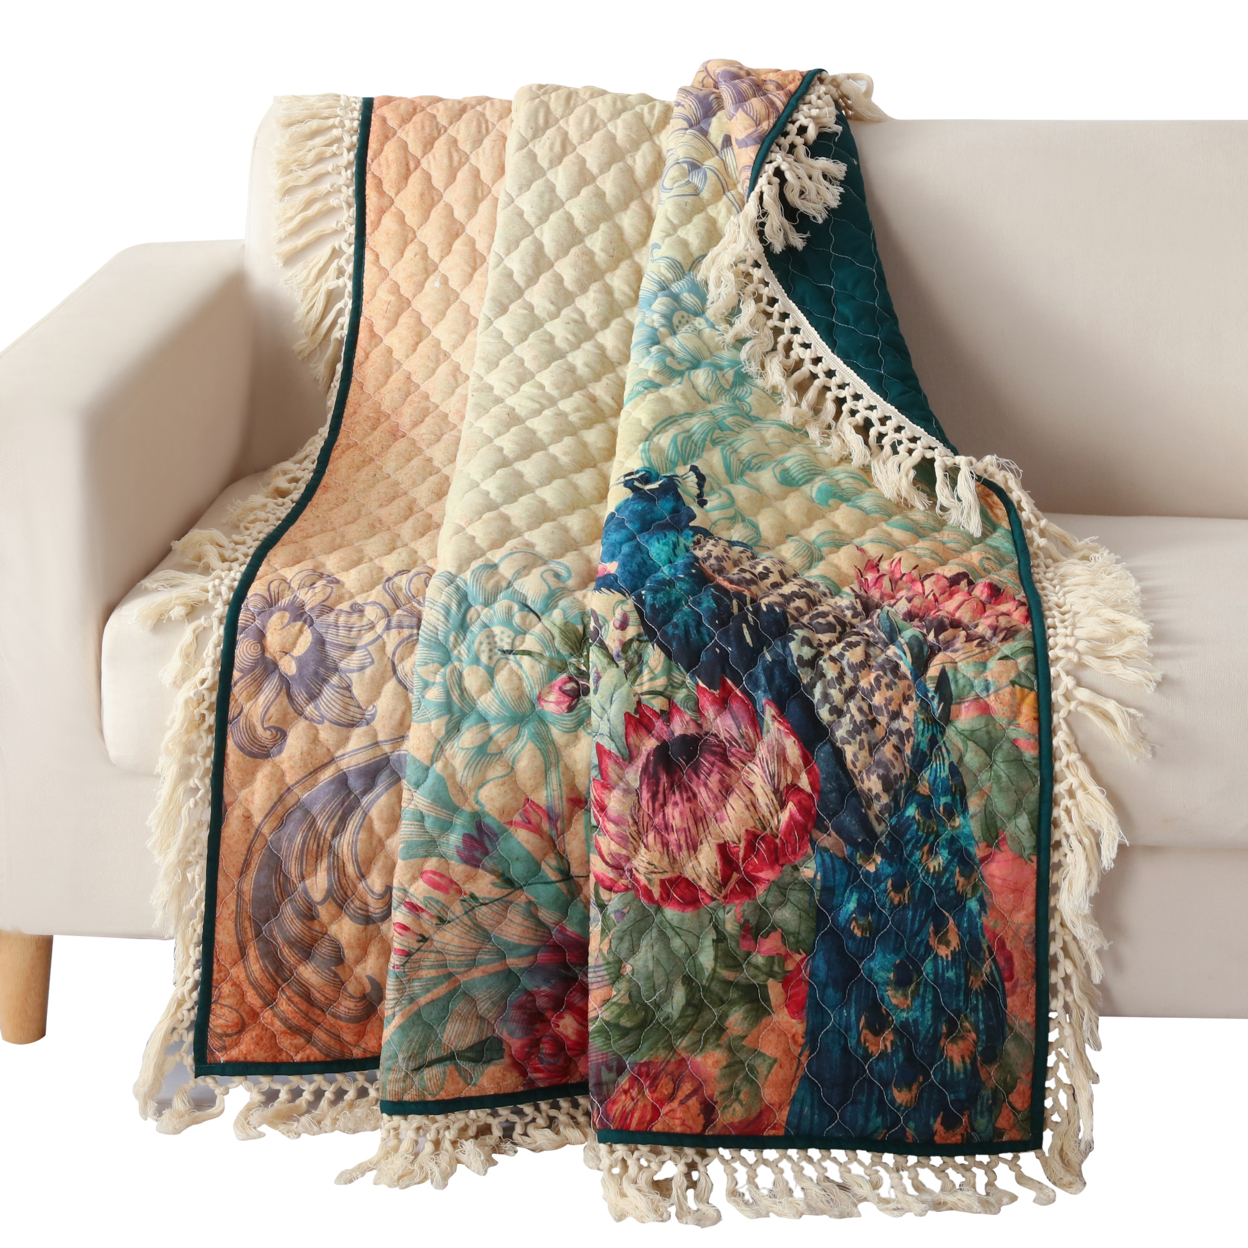 Ufa 60 Inch Quilted Throw Blanket, Blue Microfiber, Peacock, Floral Design- Saltoro Sherpi